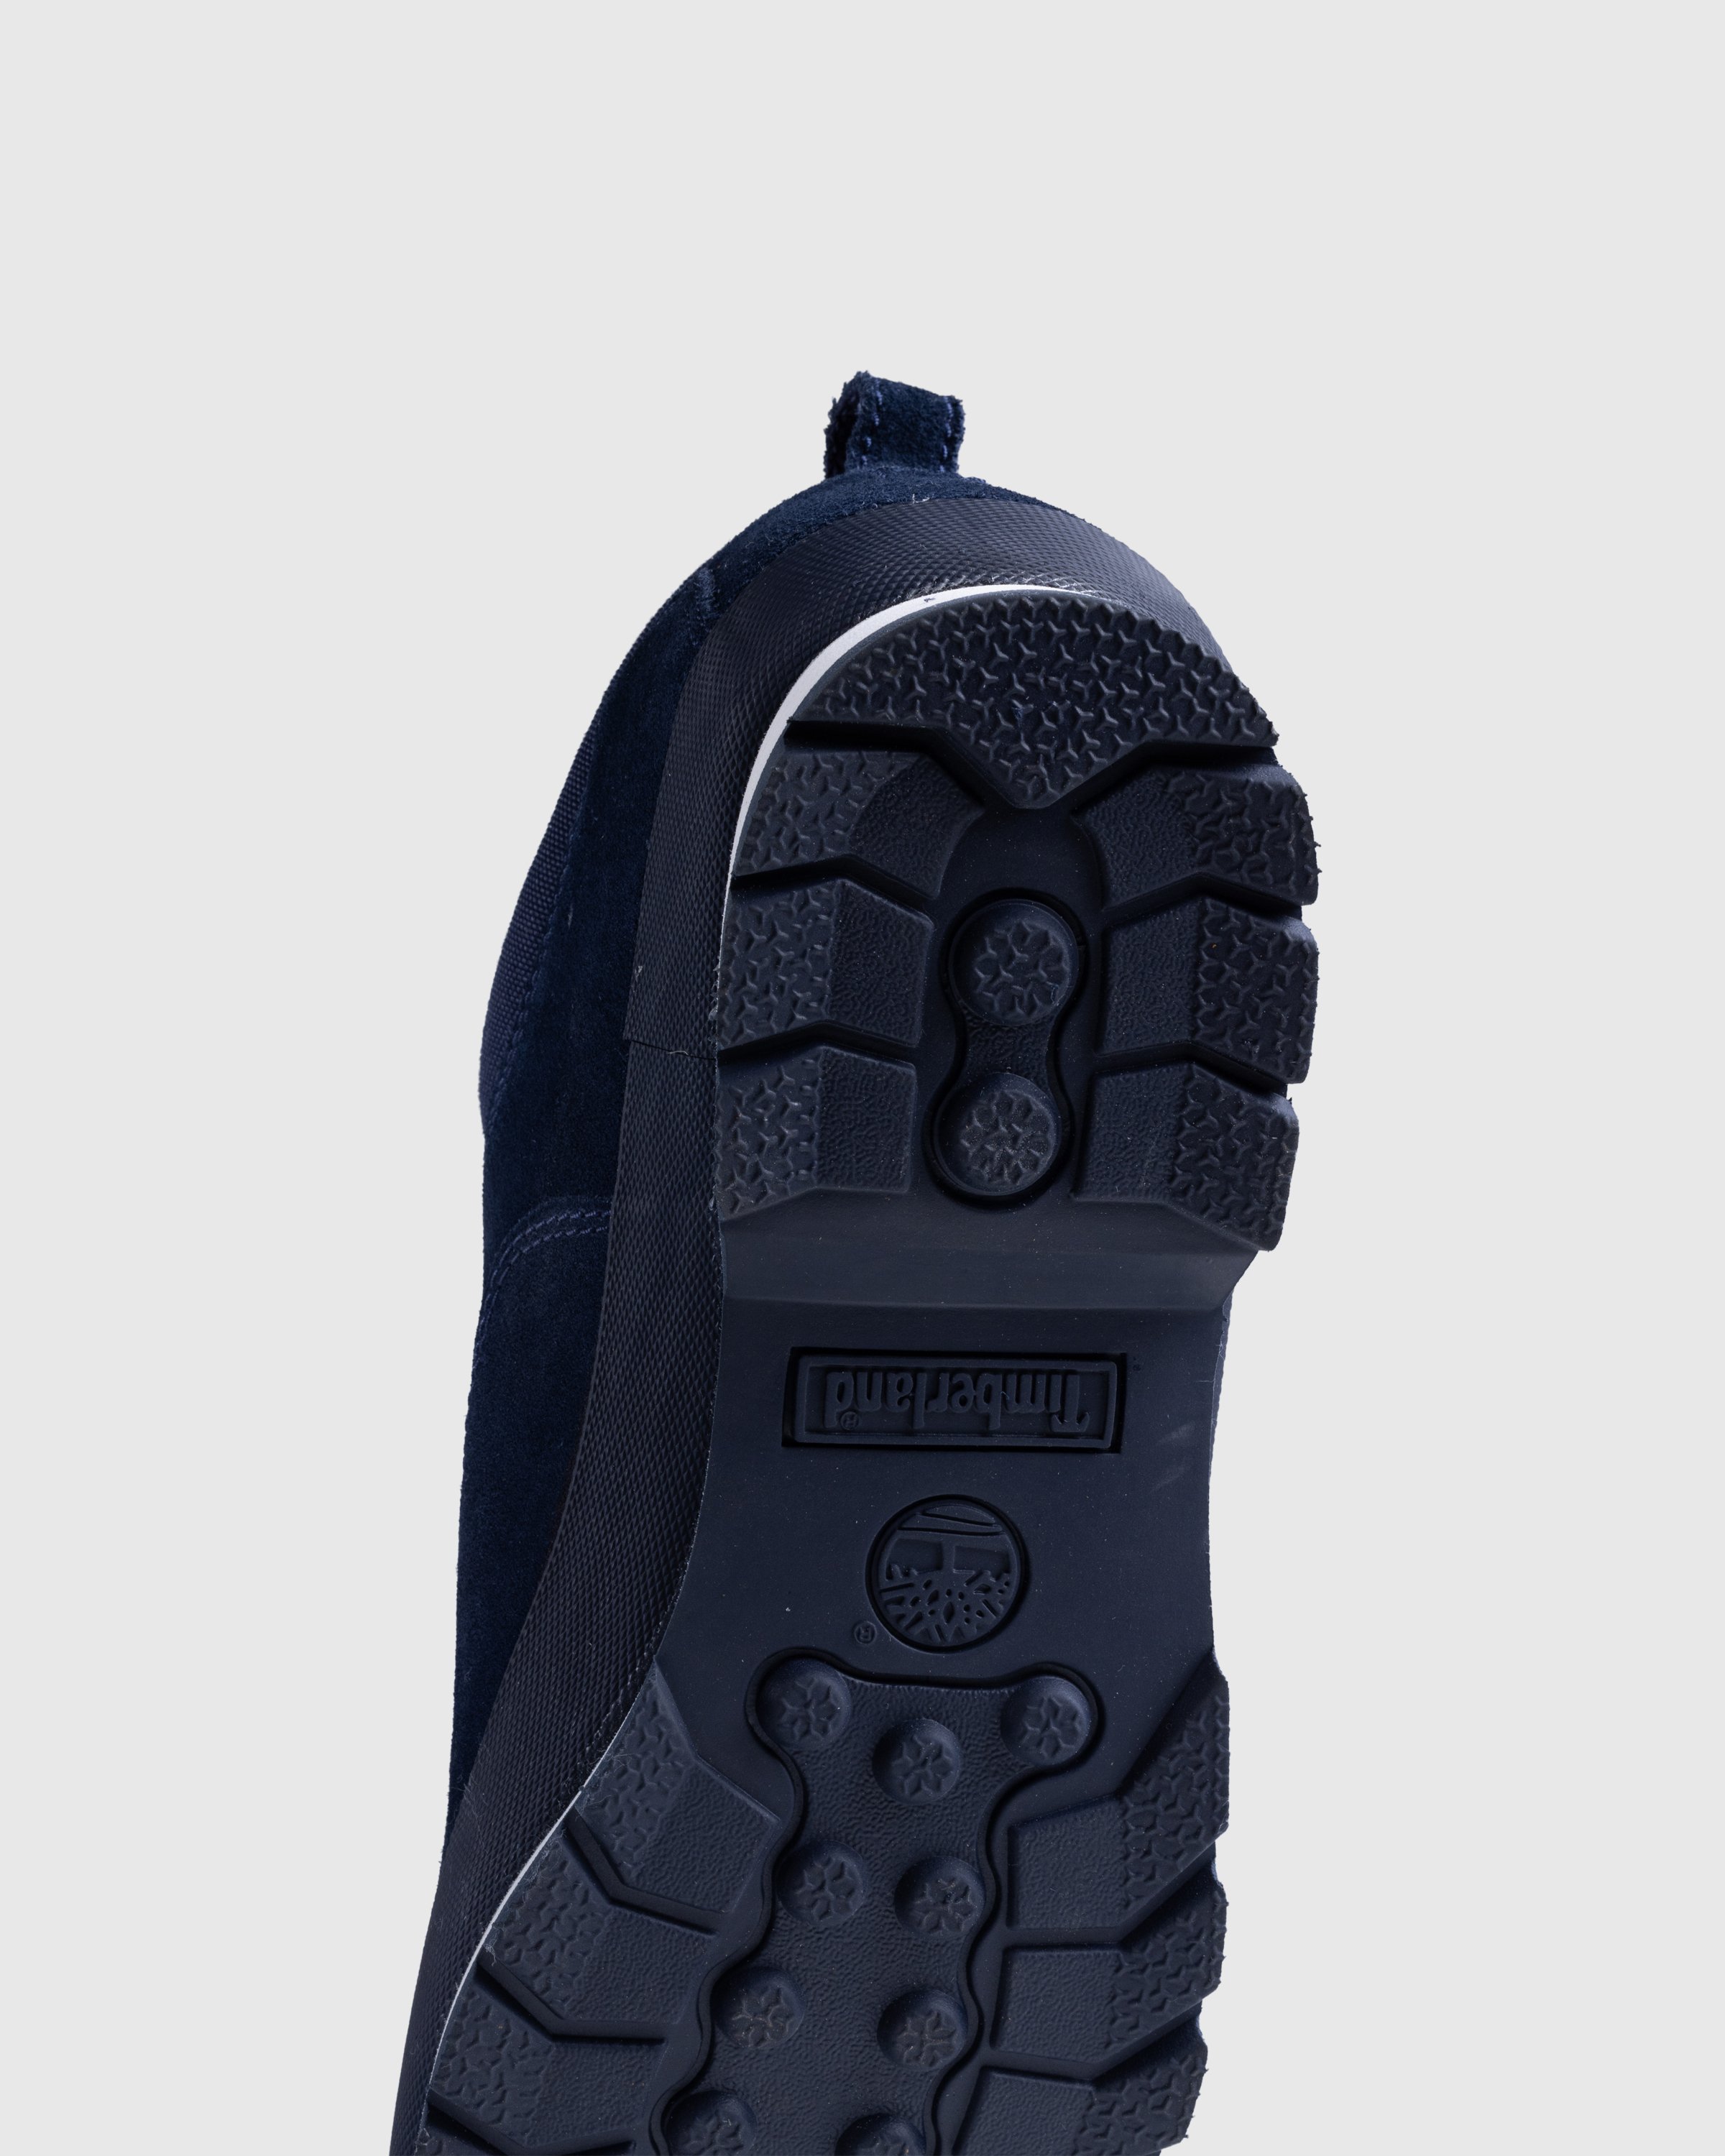 Timberland - Euro Hiker Low Navy - Footwear - Blue - Image 6